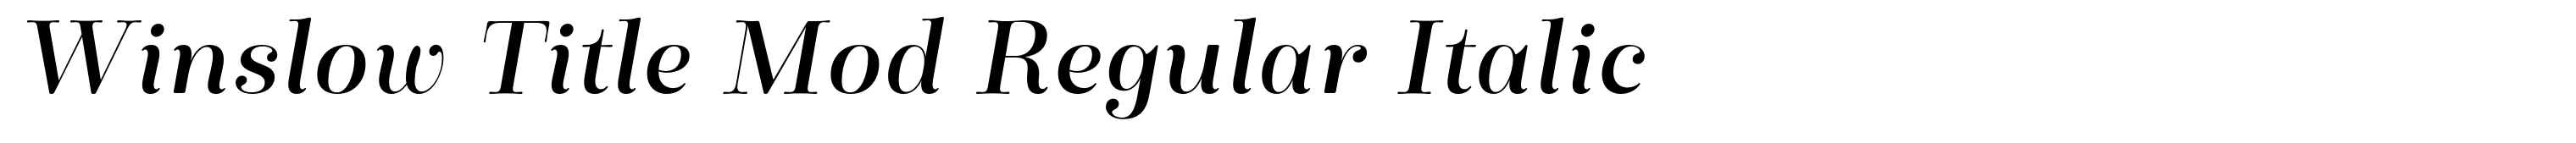 Winslow Title Mod Regular Italic